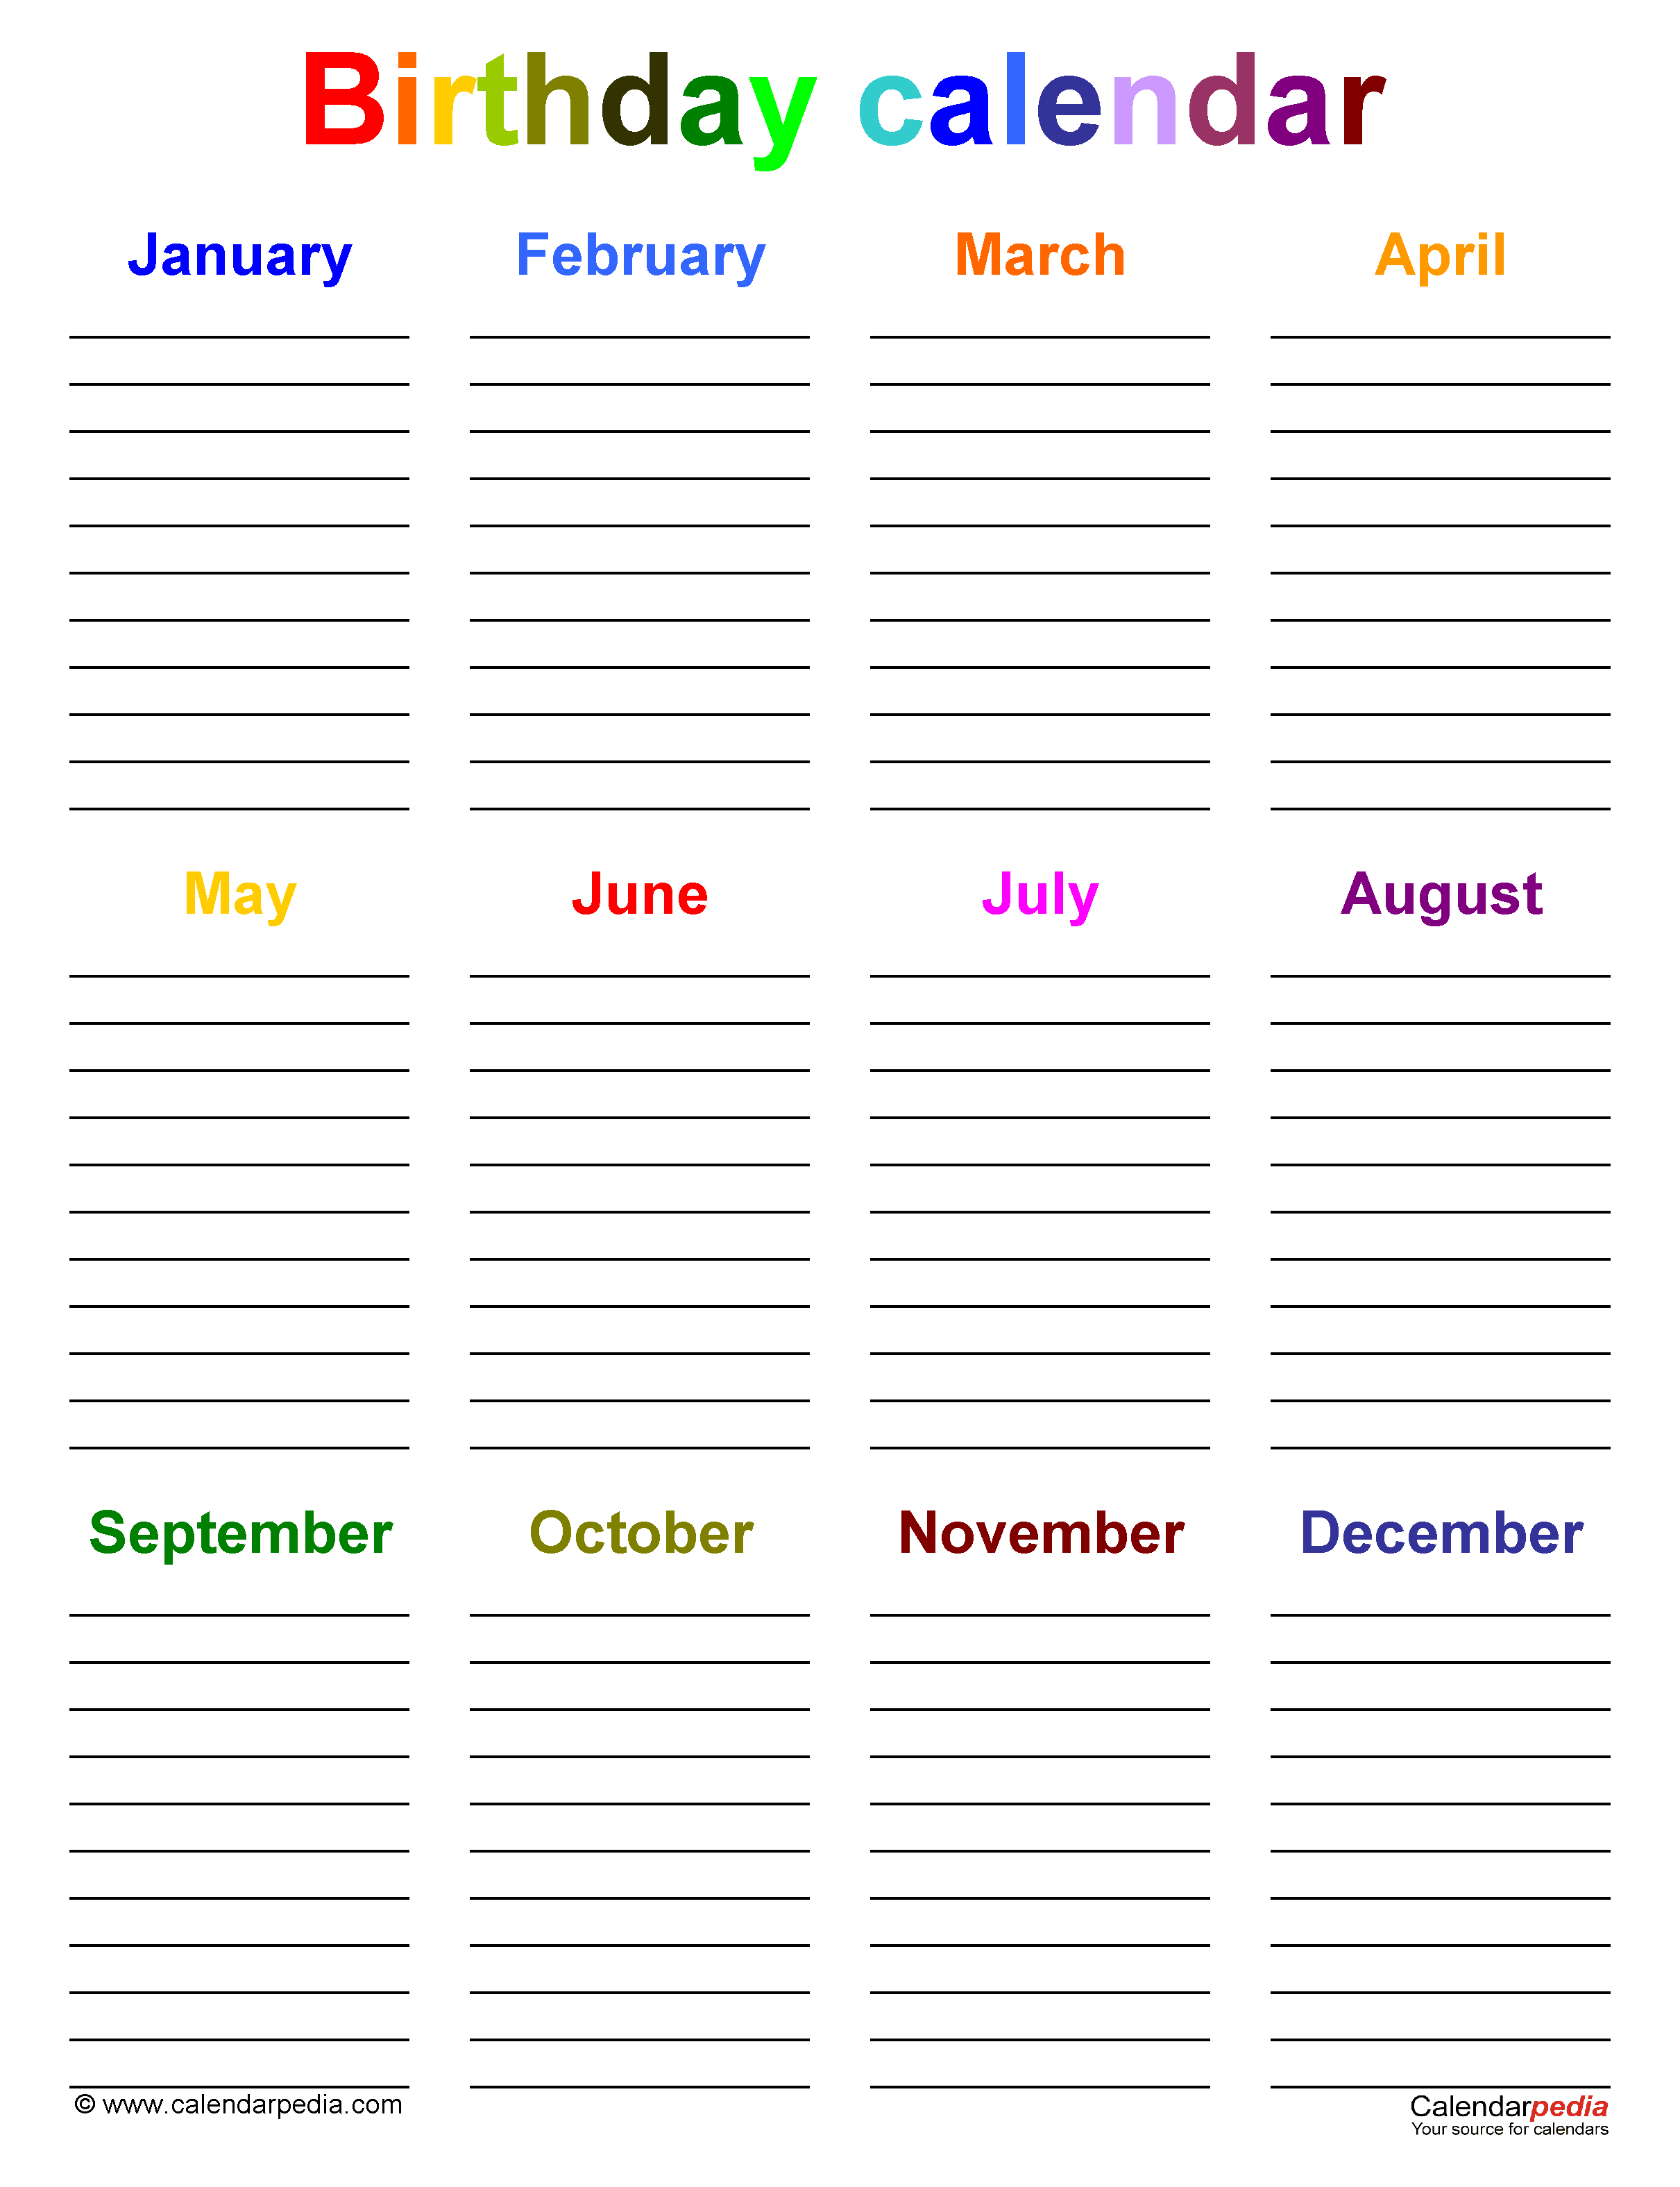 free calendar template for birthdays 24